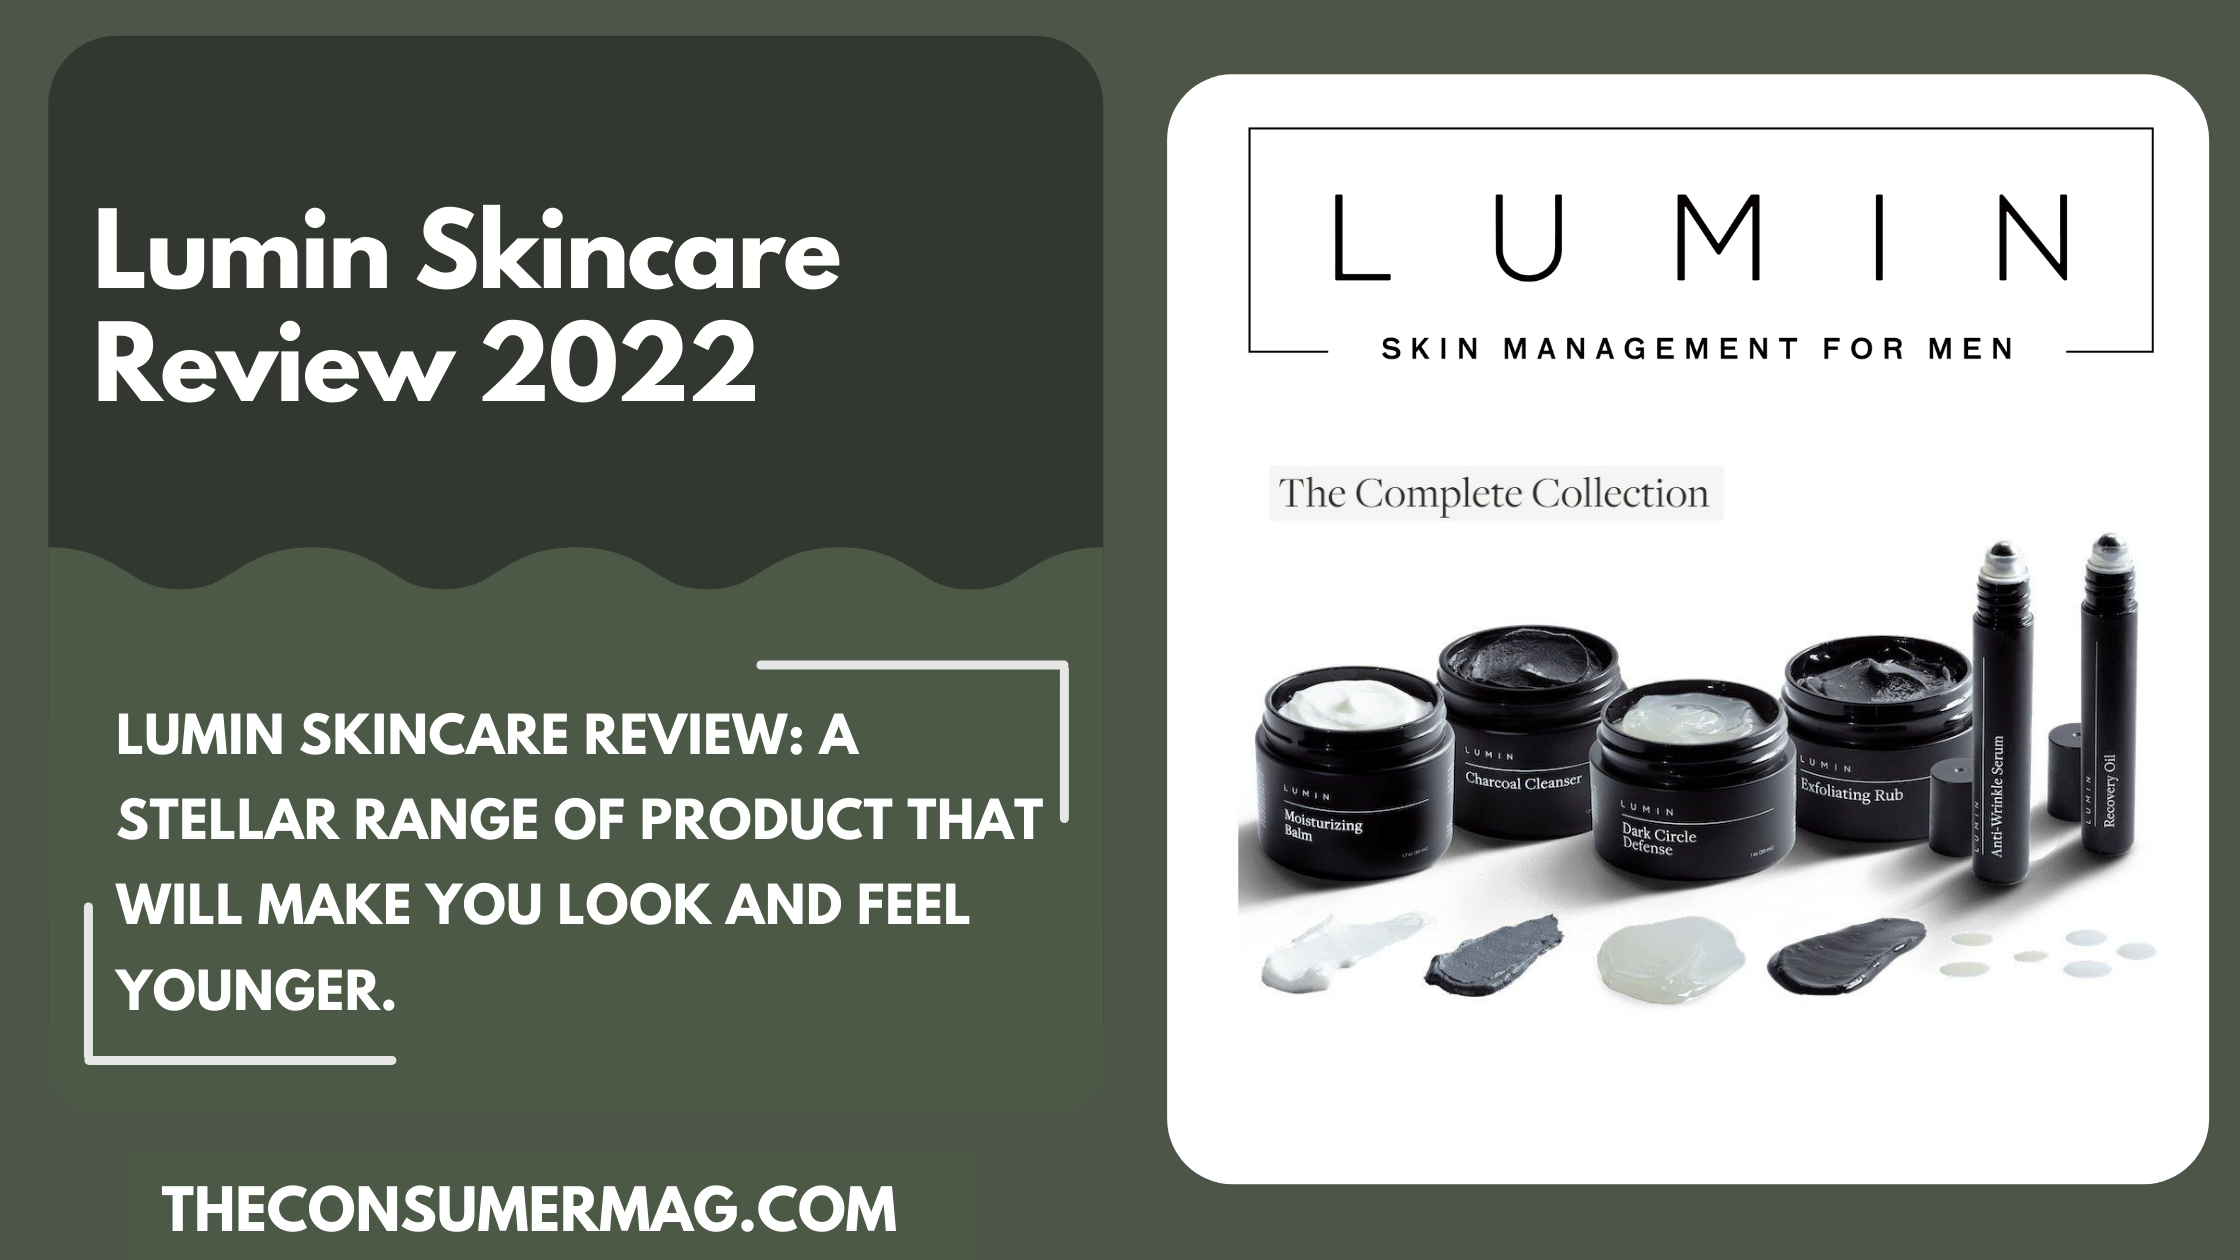 lumin skin featured image